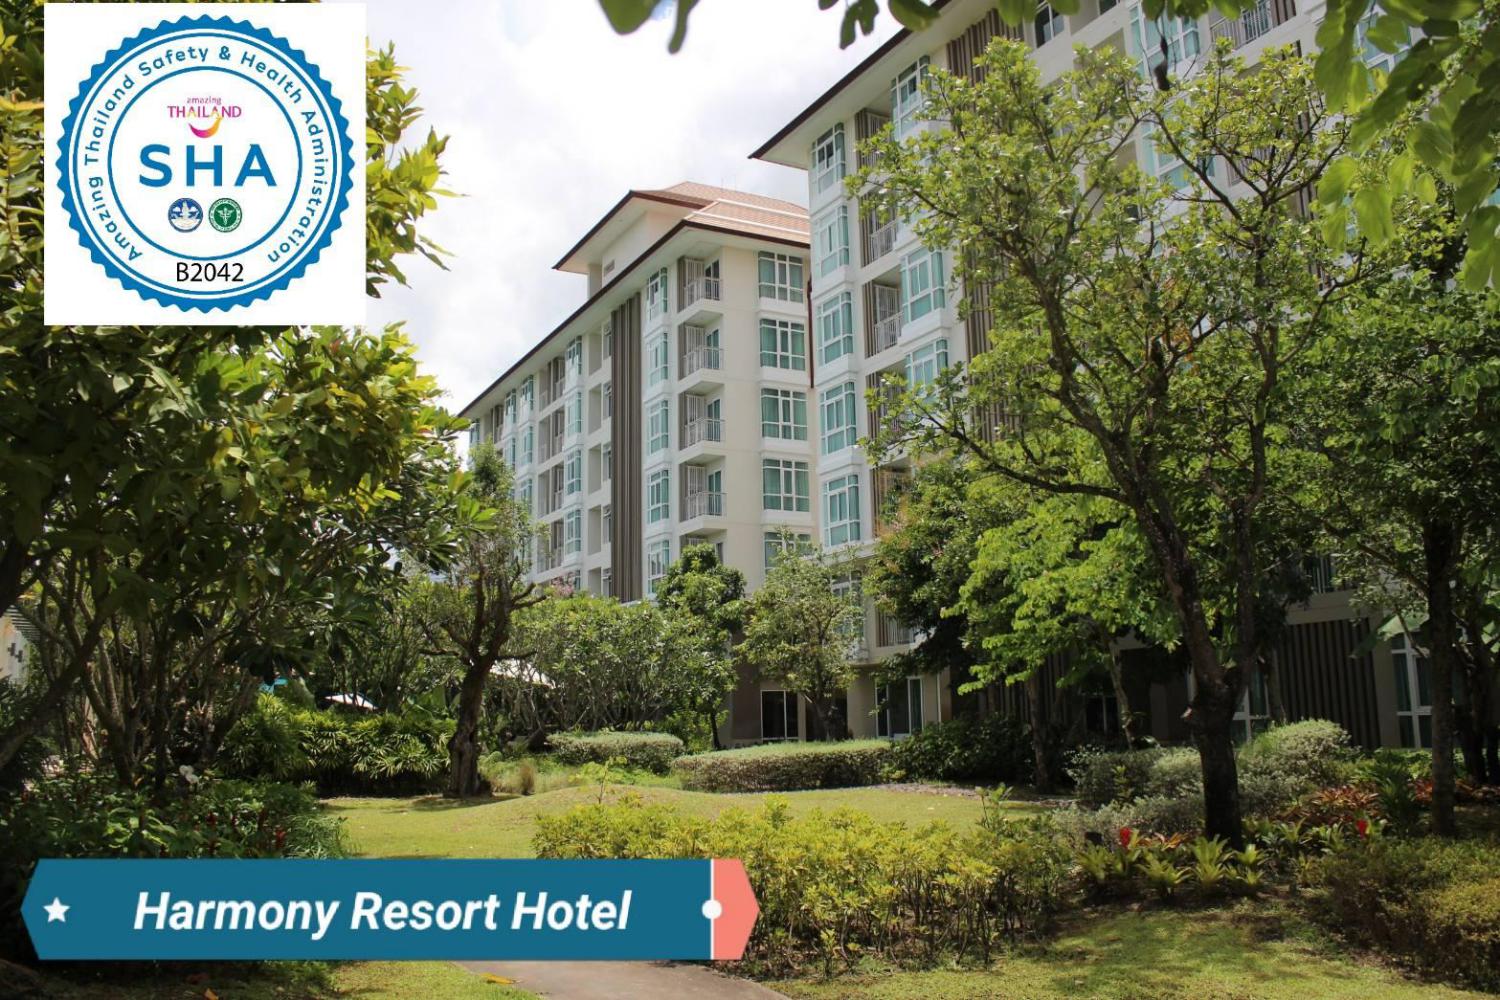 Harmony Resort Hotel - Image 0